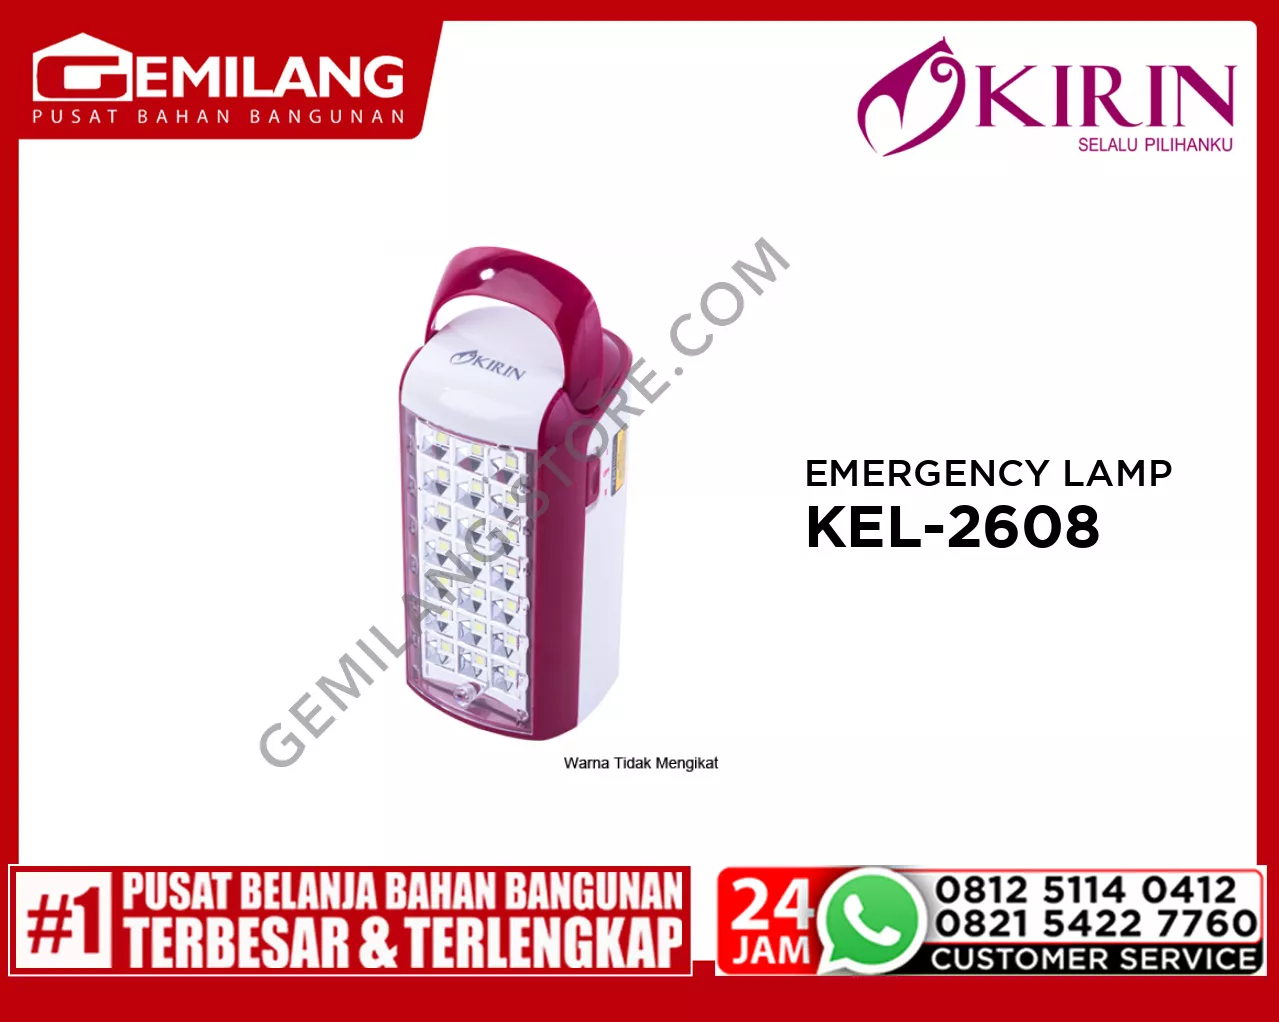 KIRIN EMERGENCY LAMP 44 LED KEL-2608